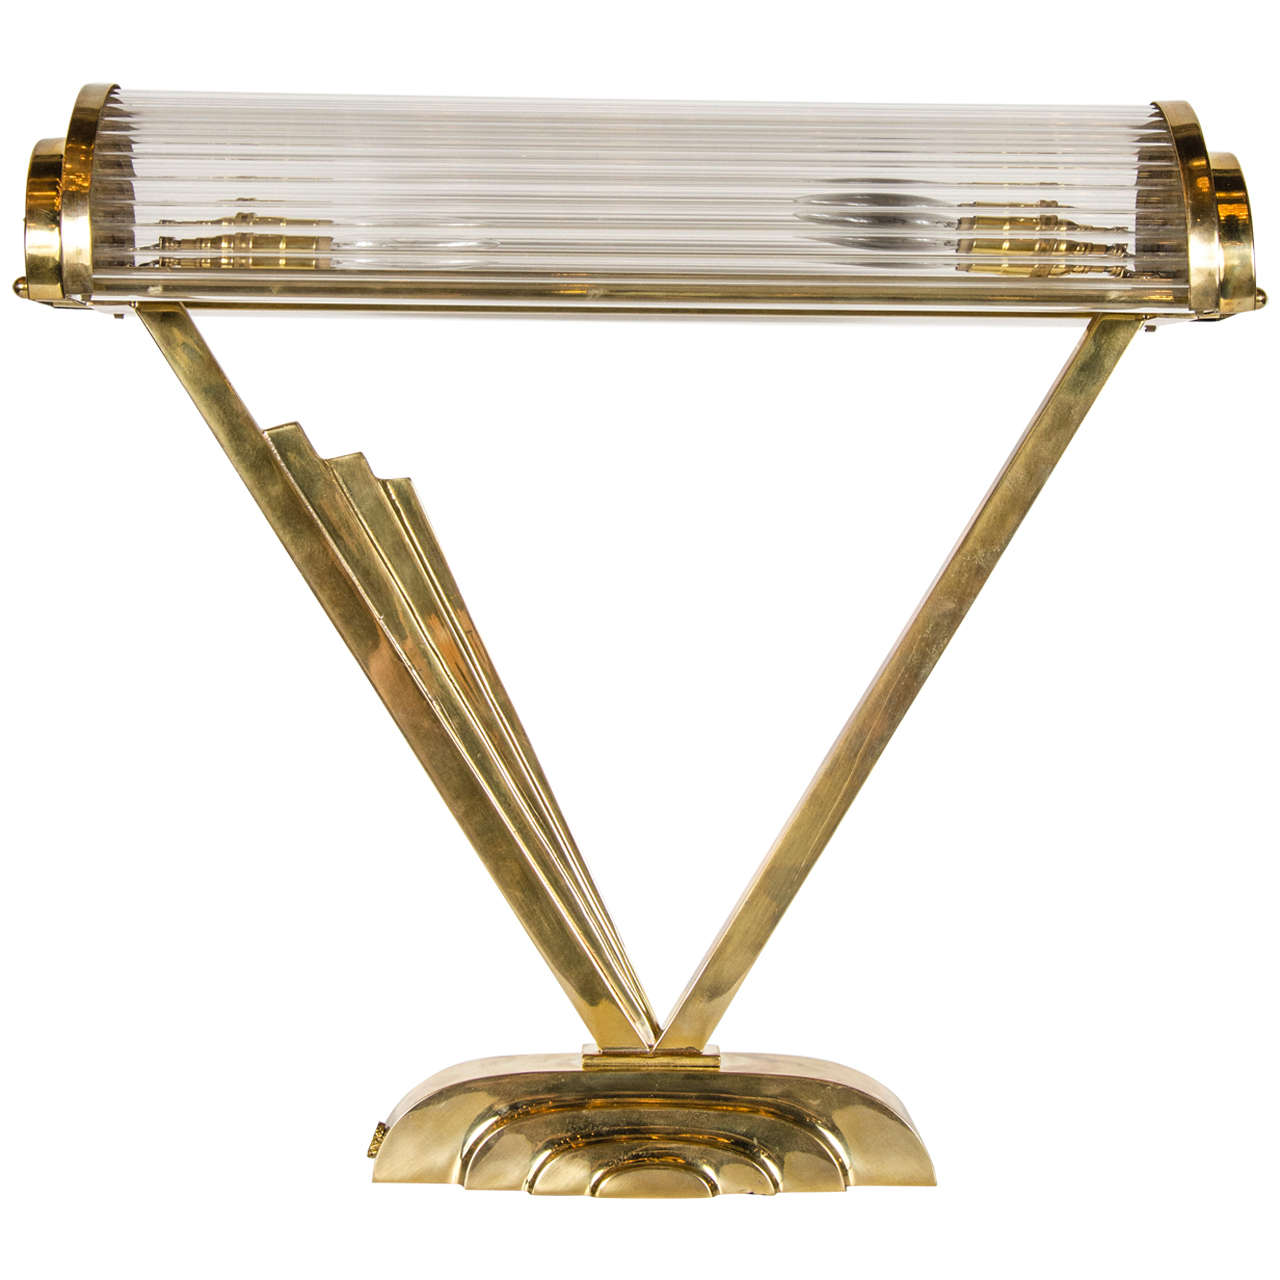 Art Deco Machine Age Brass Desk Lamp in the Manner of Josef Hoffman